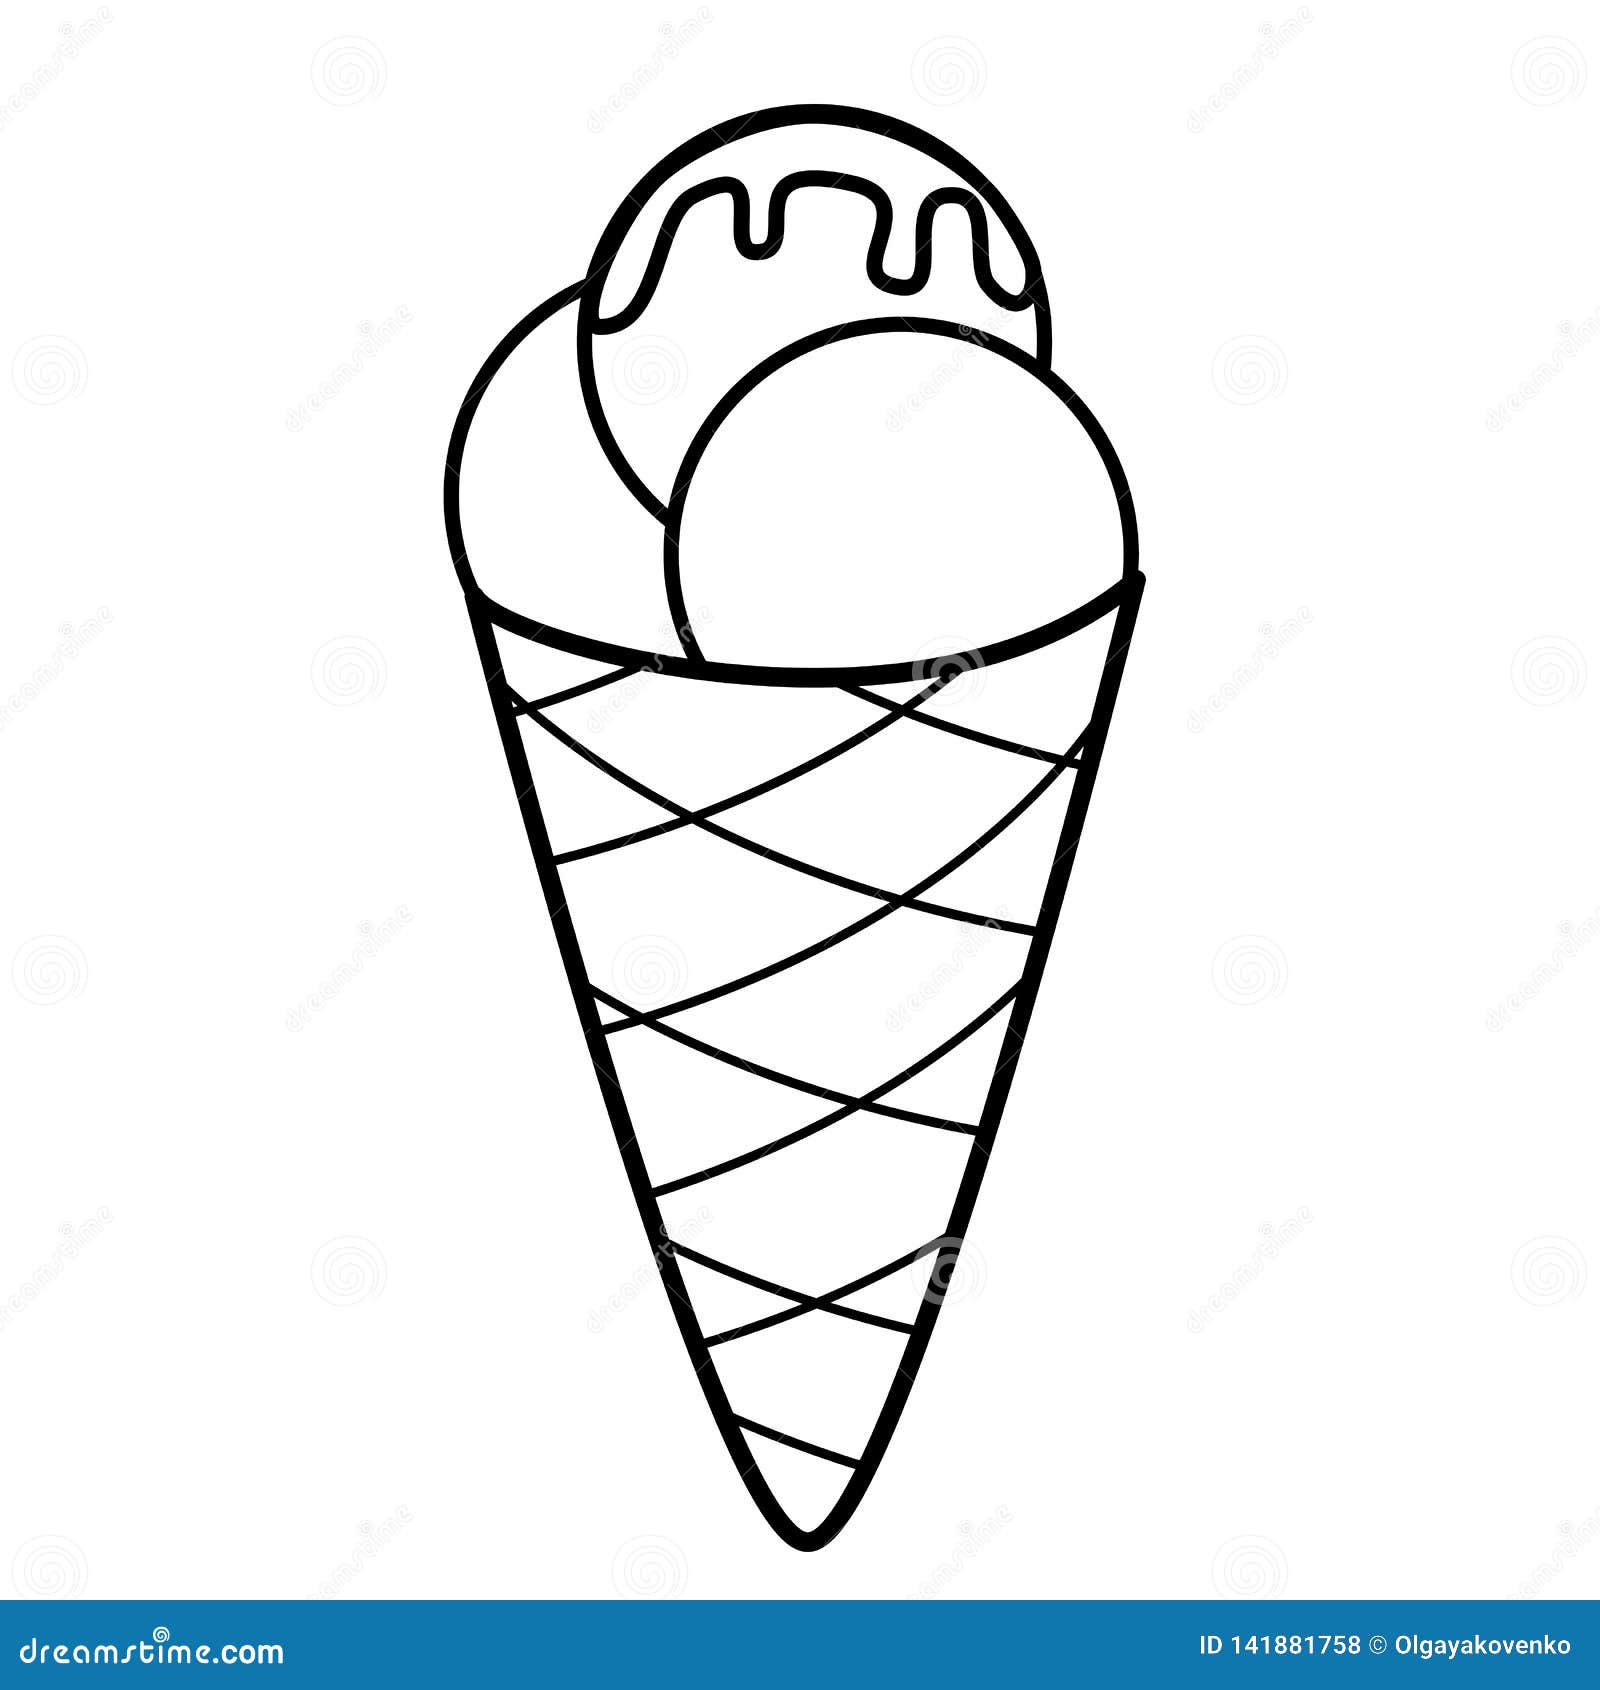 Grunge sticker tattoo style ice cream character Vector Image